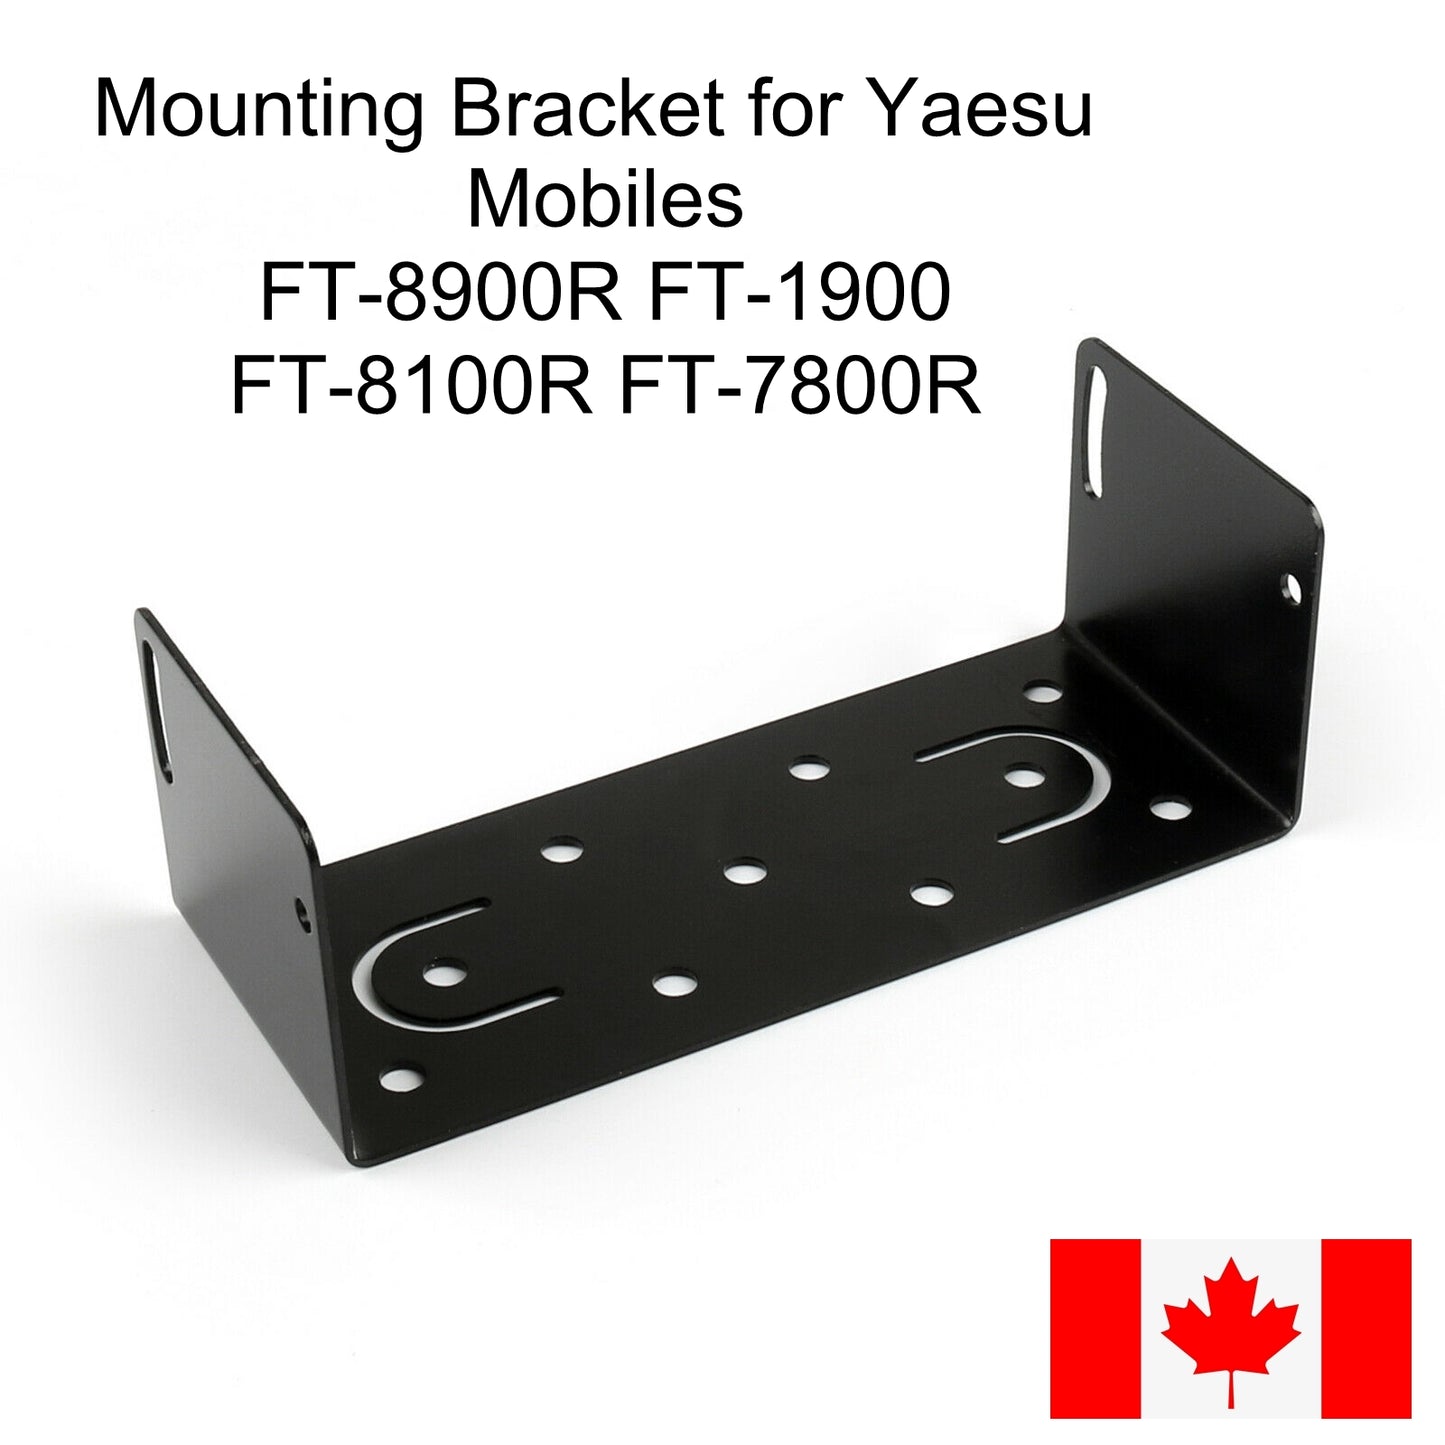 Yaesu MMB-36 Mounting Bracket